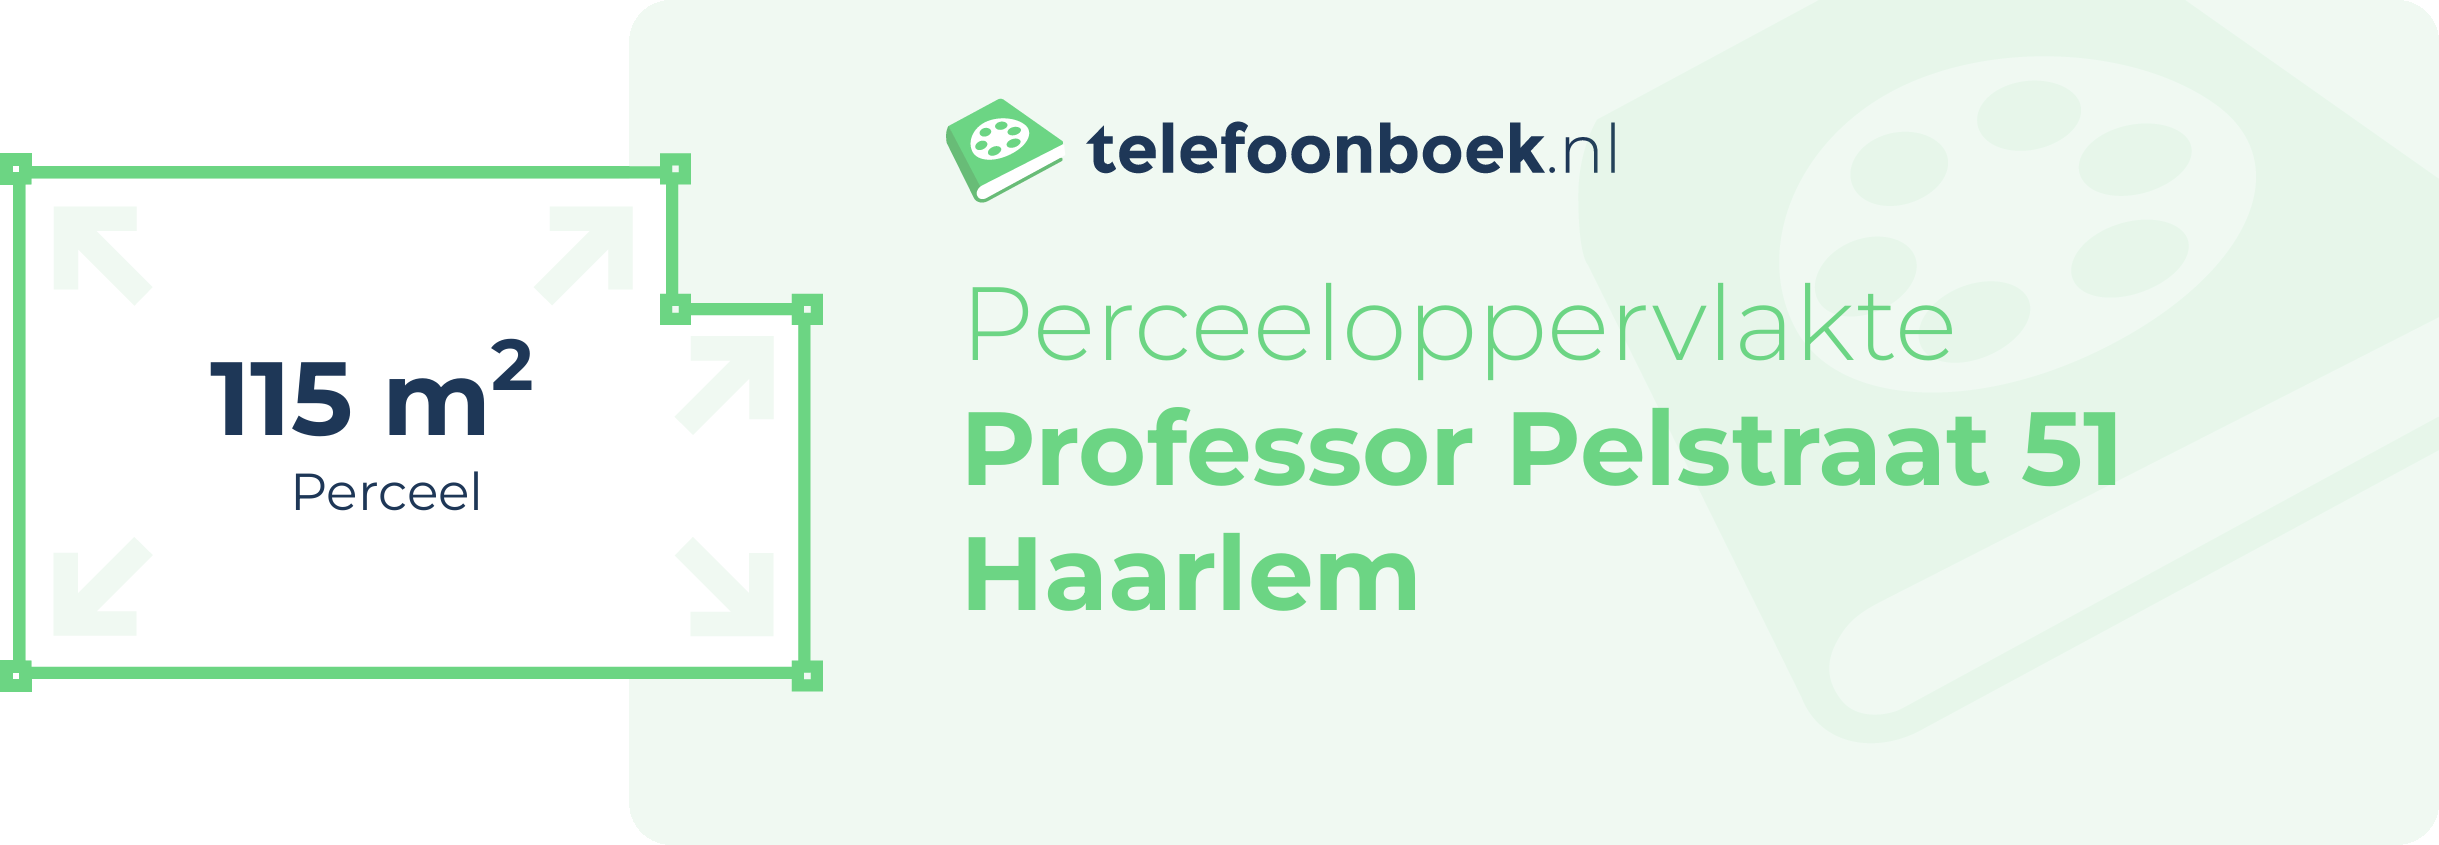 Perceeloppervlakte Professor Pelstraat 51 Haarlem